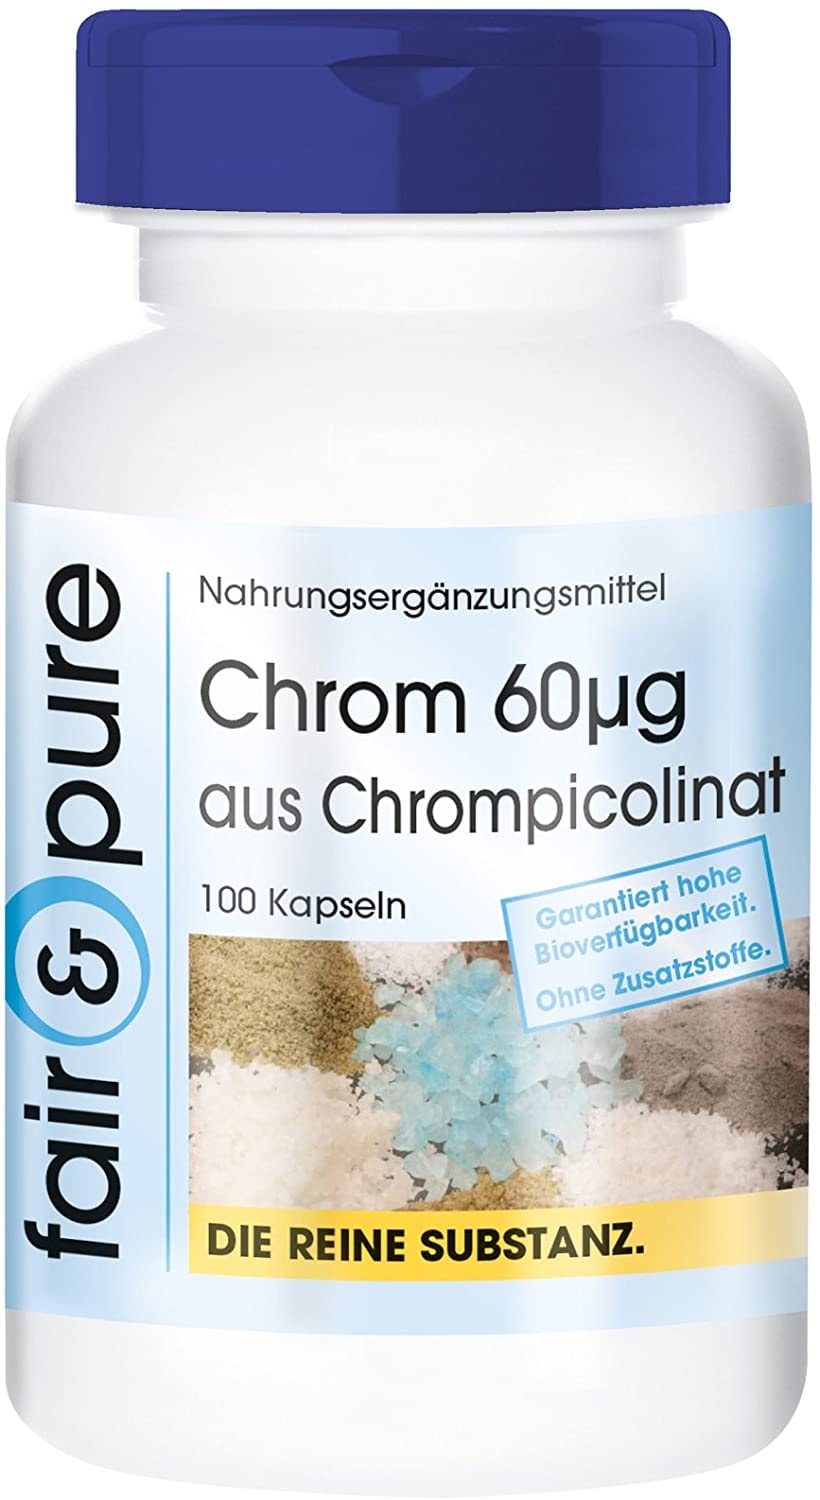 Fair & Pur Chrom 60mcg - Chrompicolinat - vegan - hefefrei - ohne Magnesiumstearat - 100 Chrom-Kapseln